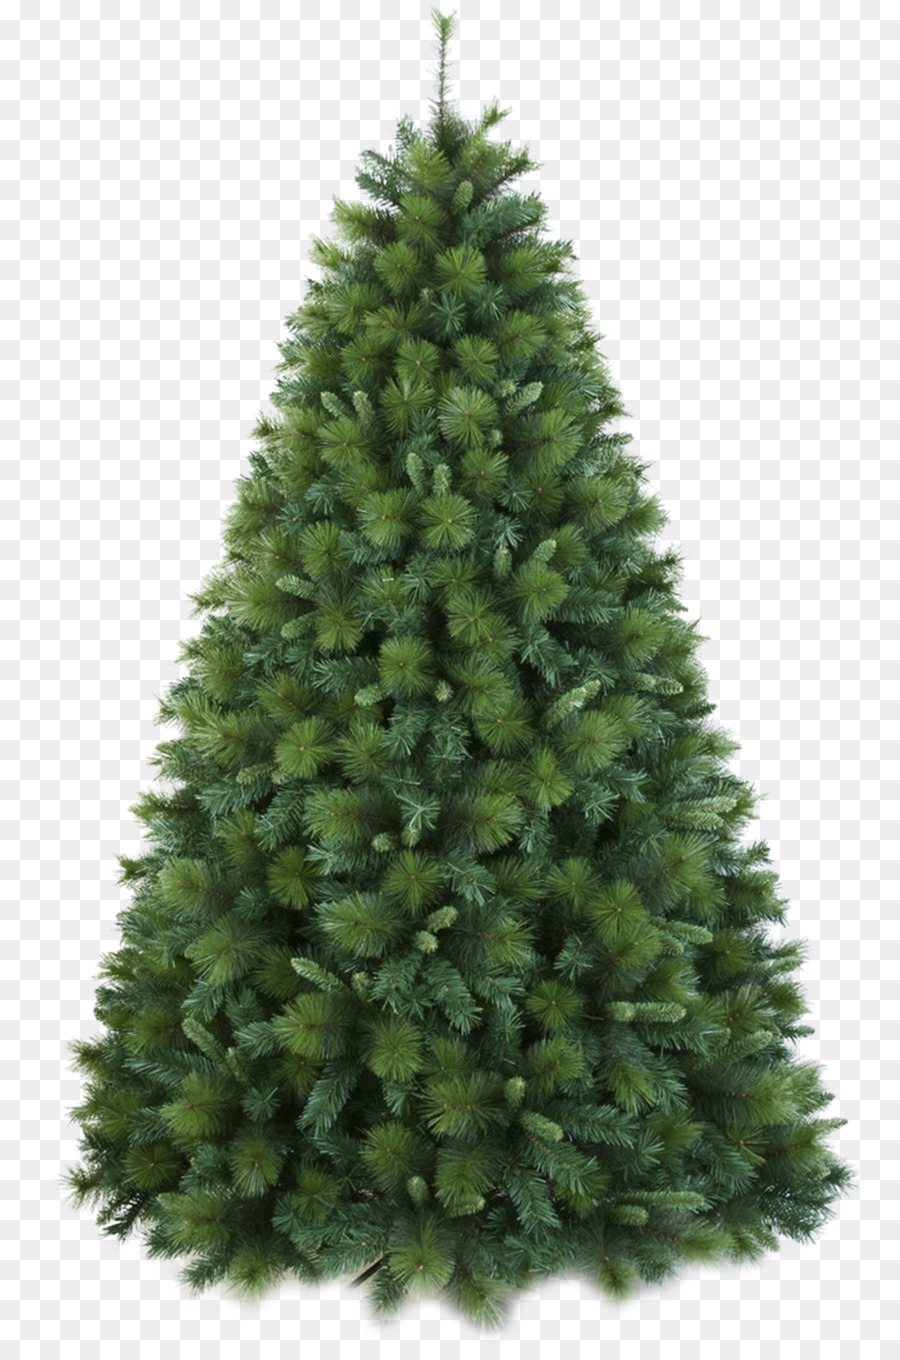 Artificial Christmas tree Douglas fir - christmas tree png download - 1066*1600 - Free Transparent Christmas Tree png Download.